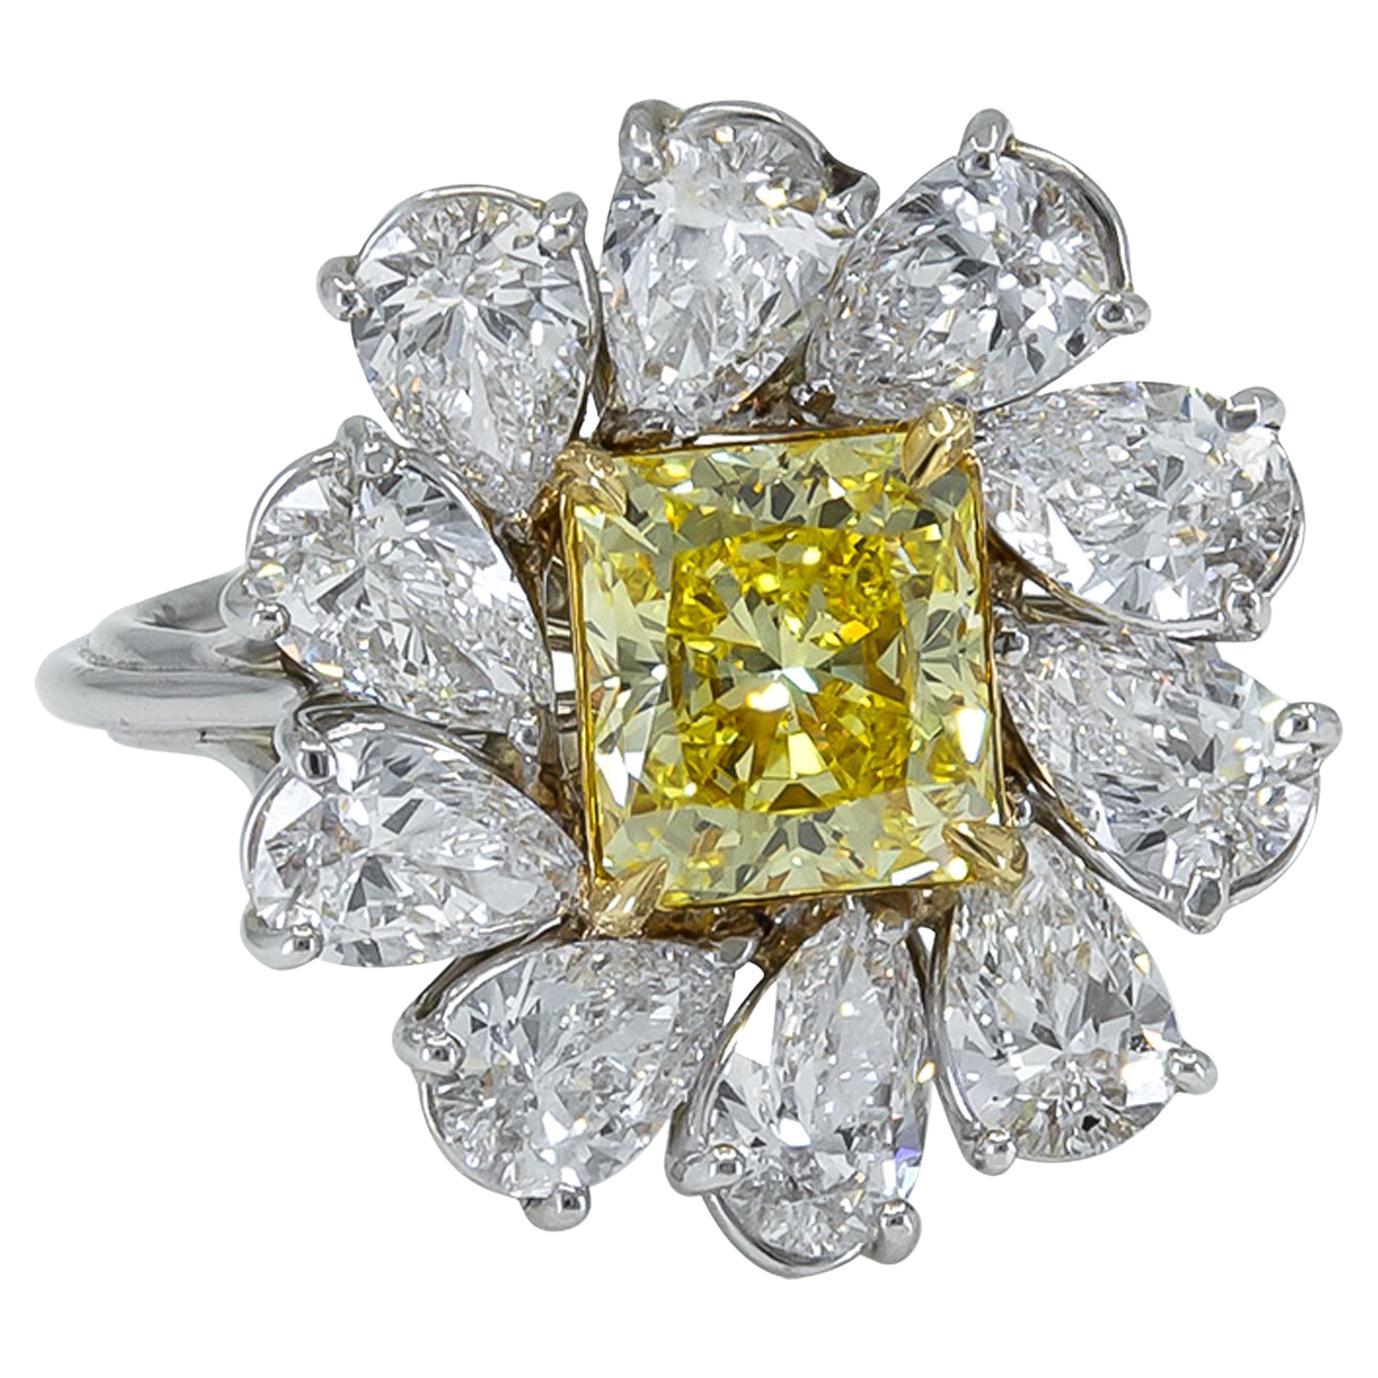 Spectra Fine Jewelry GIA Certified 1.47 Carat Fancy Yellow Diamond Cocktail Ring